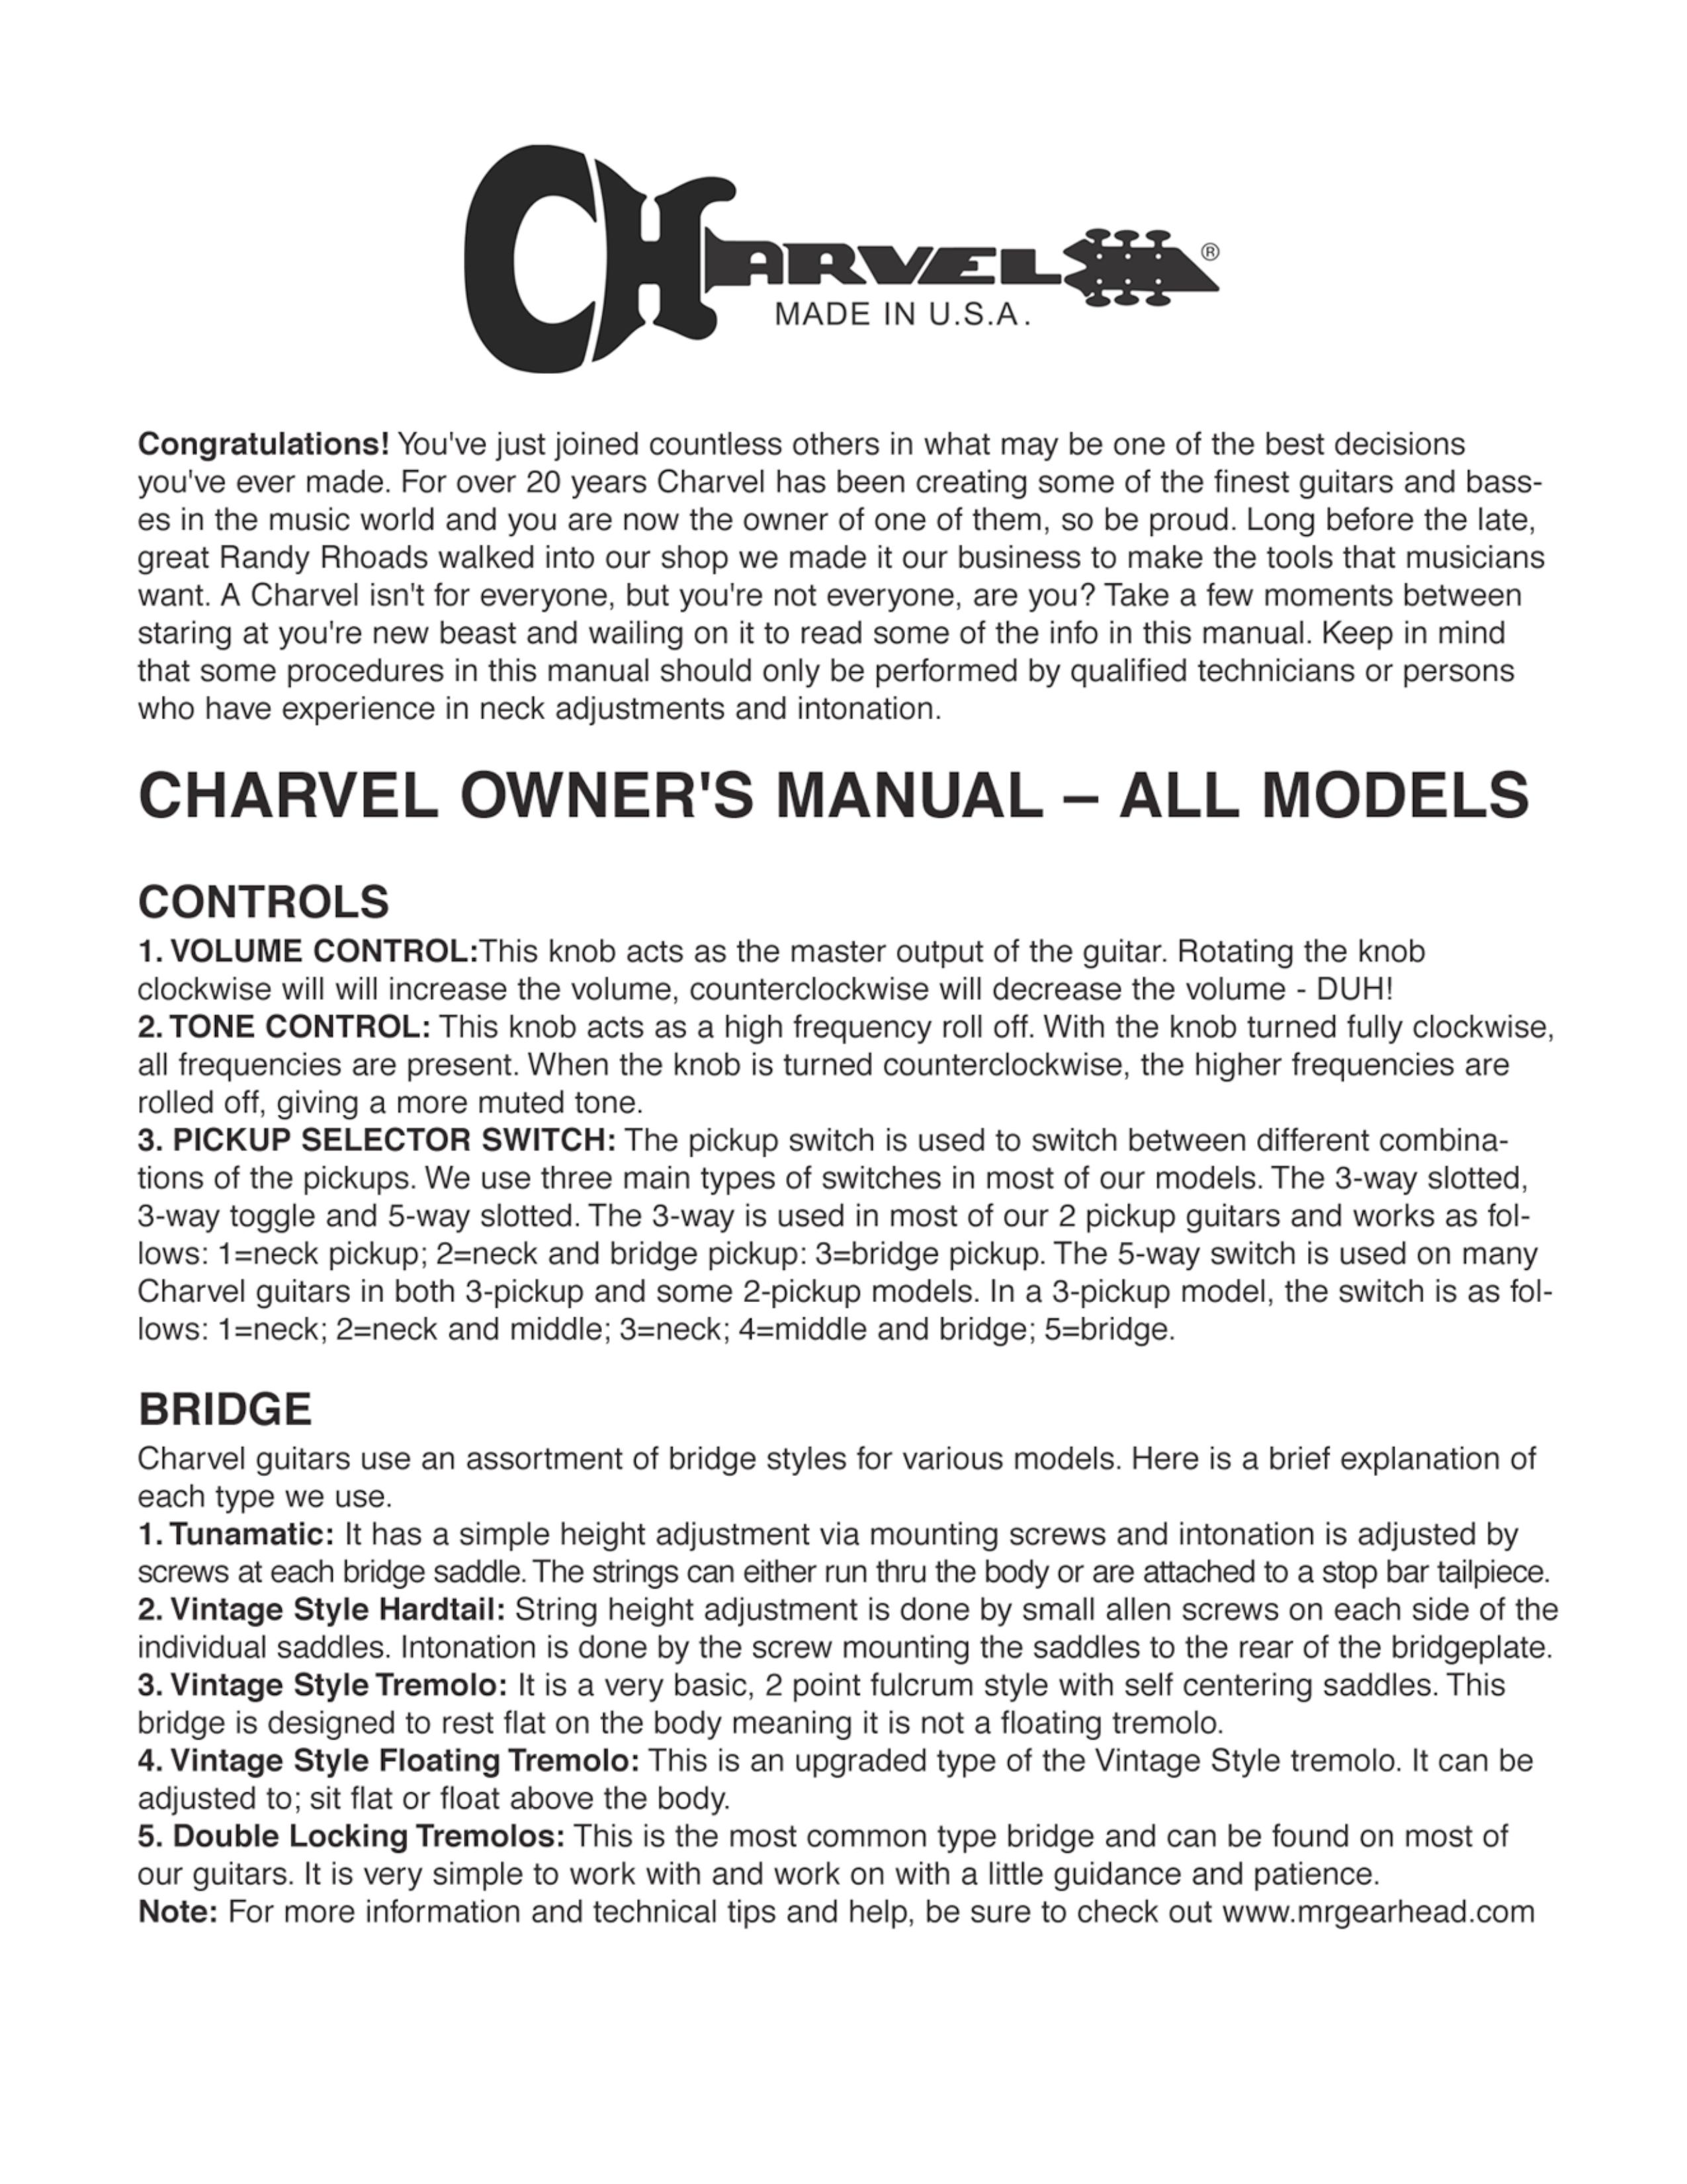 Charvel Star Bass Guitar User Manual (Page 1)